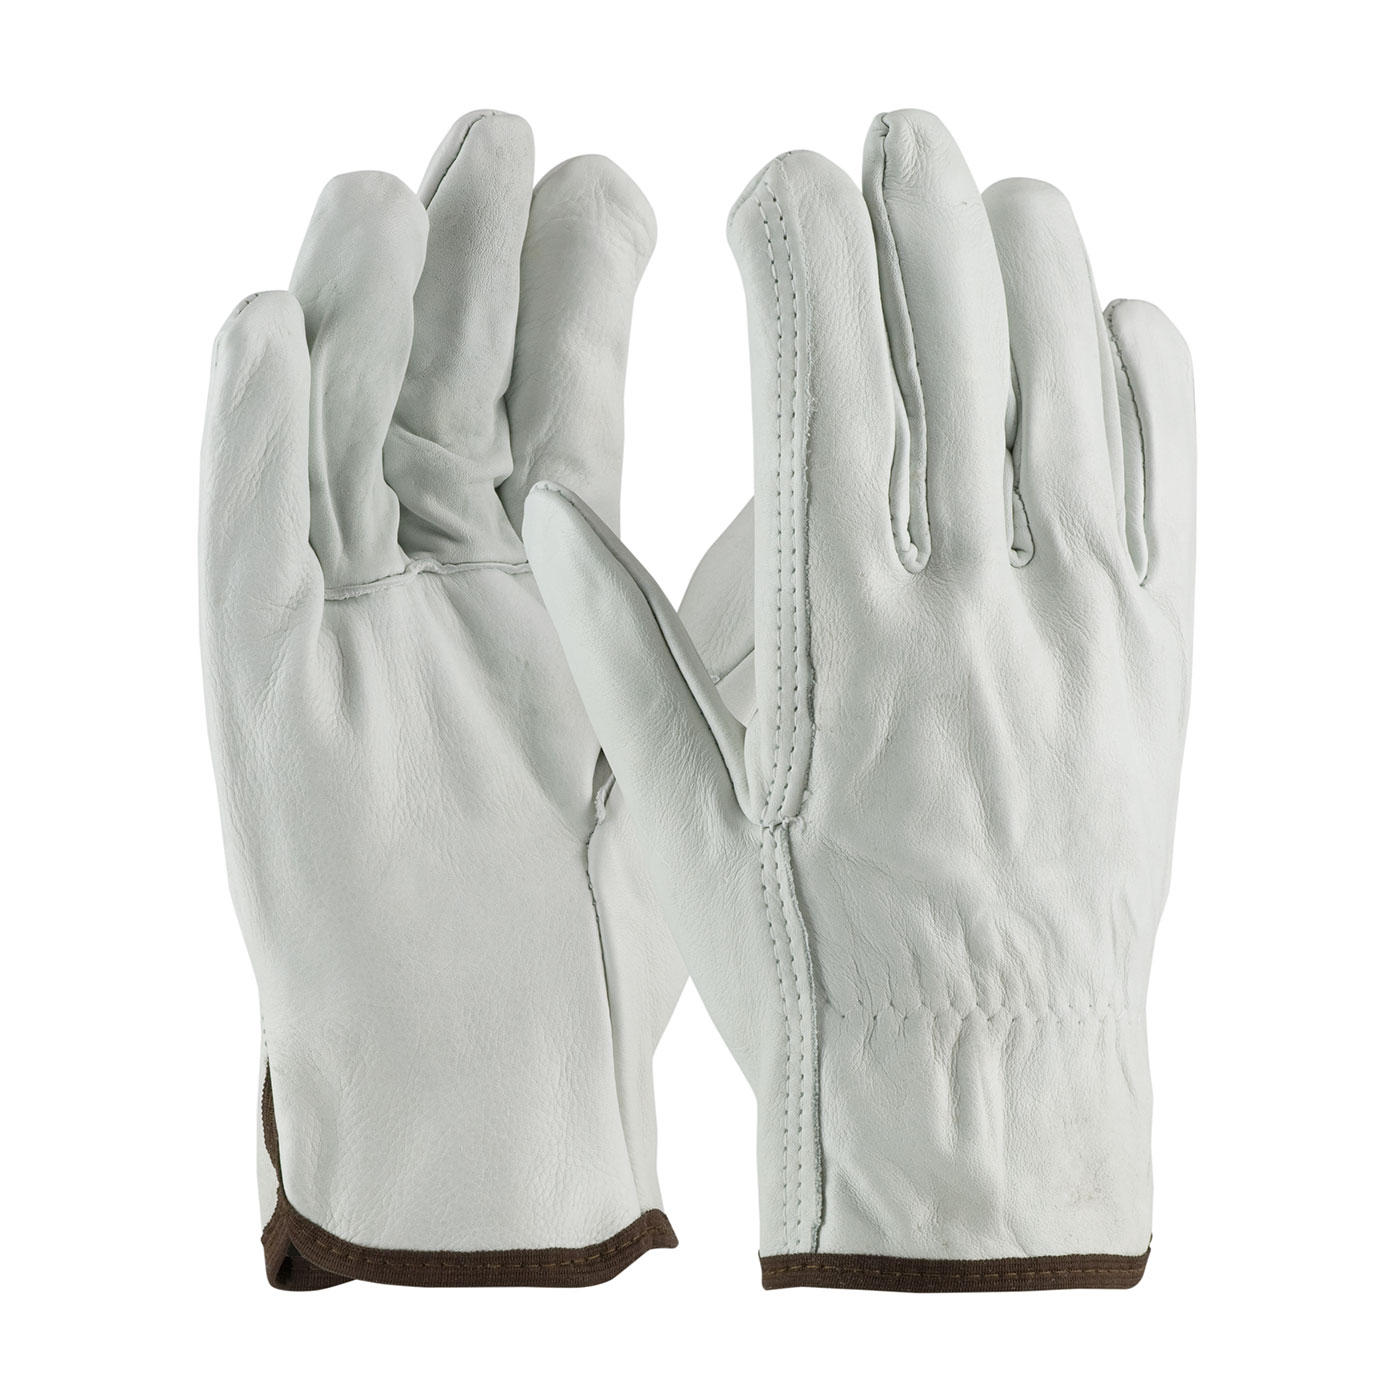 PIP 68-101/M Superior Grade Top Grain Cowhide Leather Drivers Glove - Straight Thumb - Medium PID-68 101 M